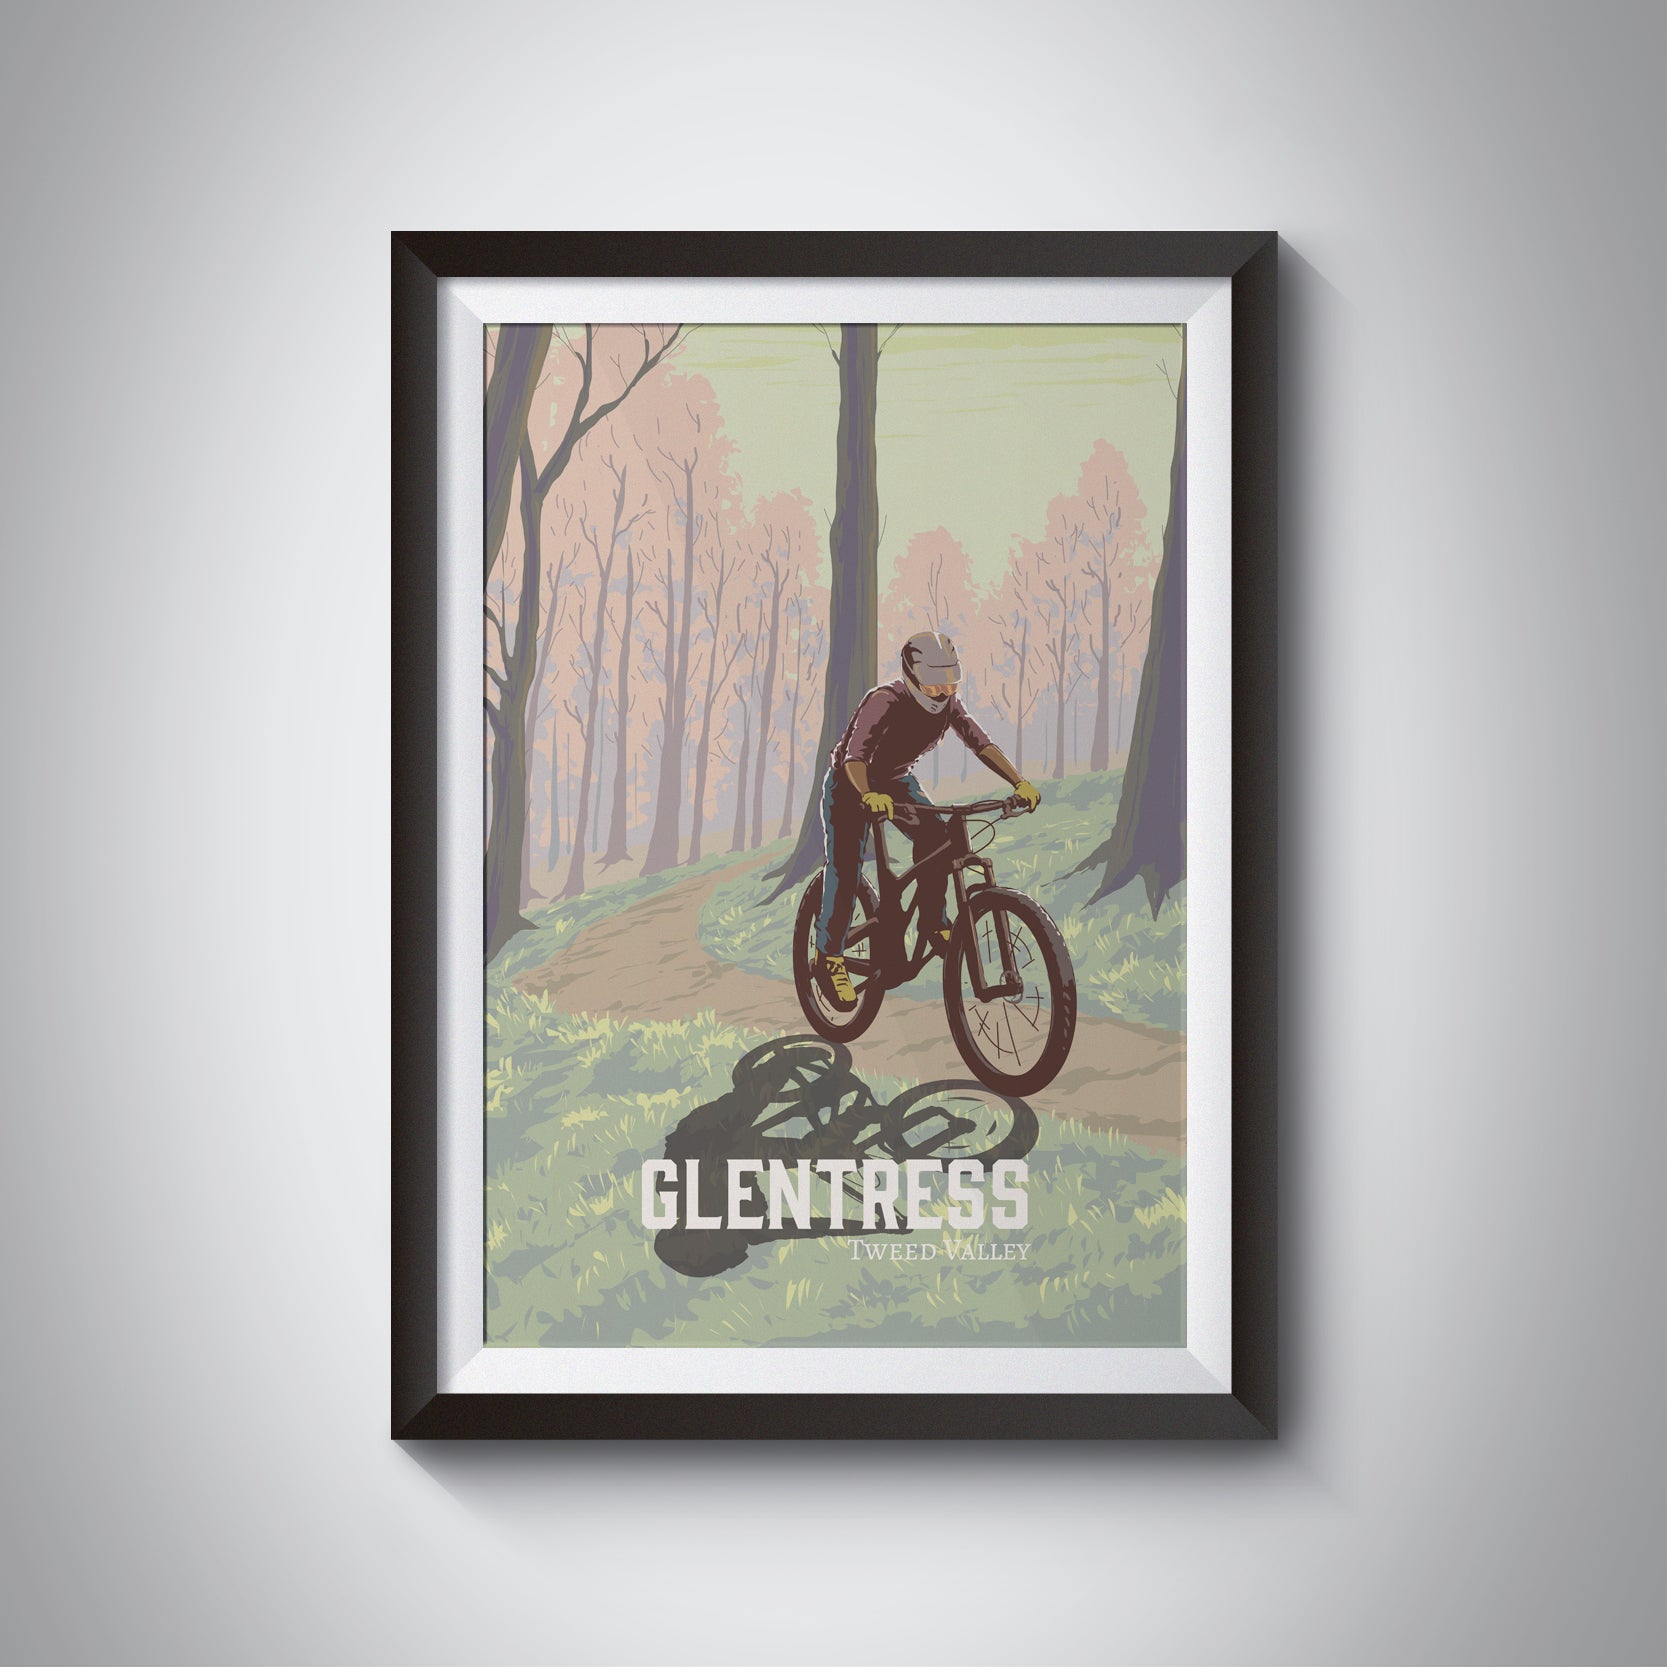 Glentress Mountain Bike Trail Centre Travel Poster